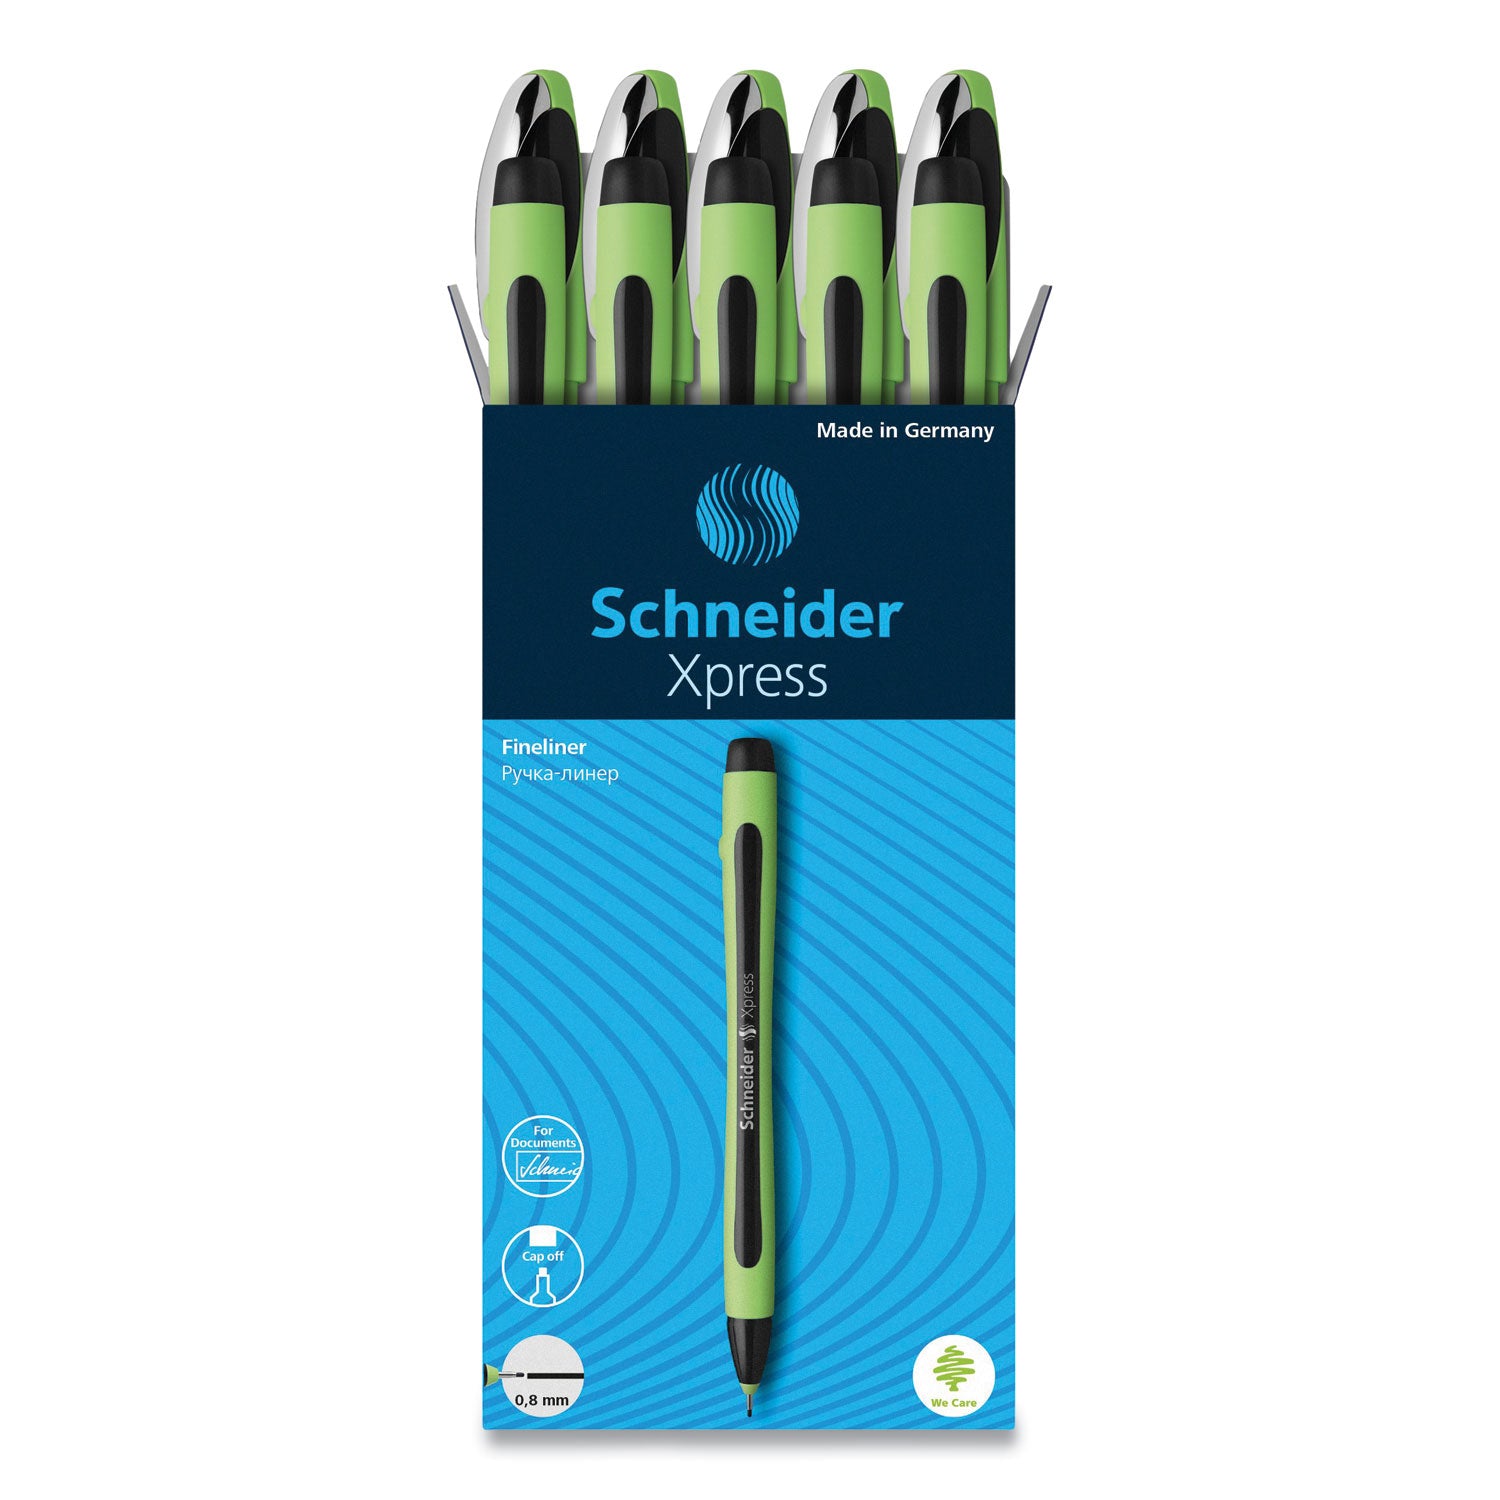 xpress-fineliner-porous-point-pen-stick-medium-08-mm-black-ink-black-green-barrel-10-box_red190001 - 1